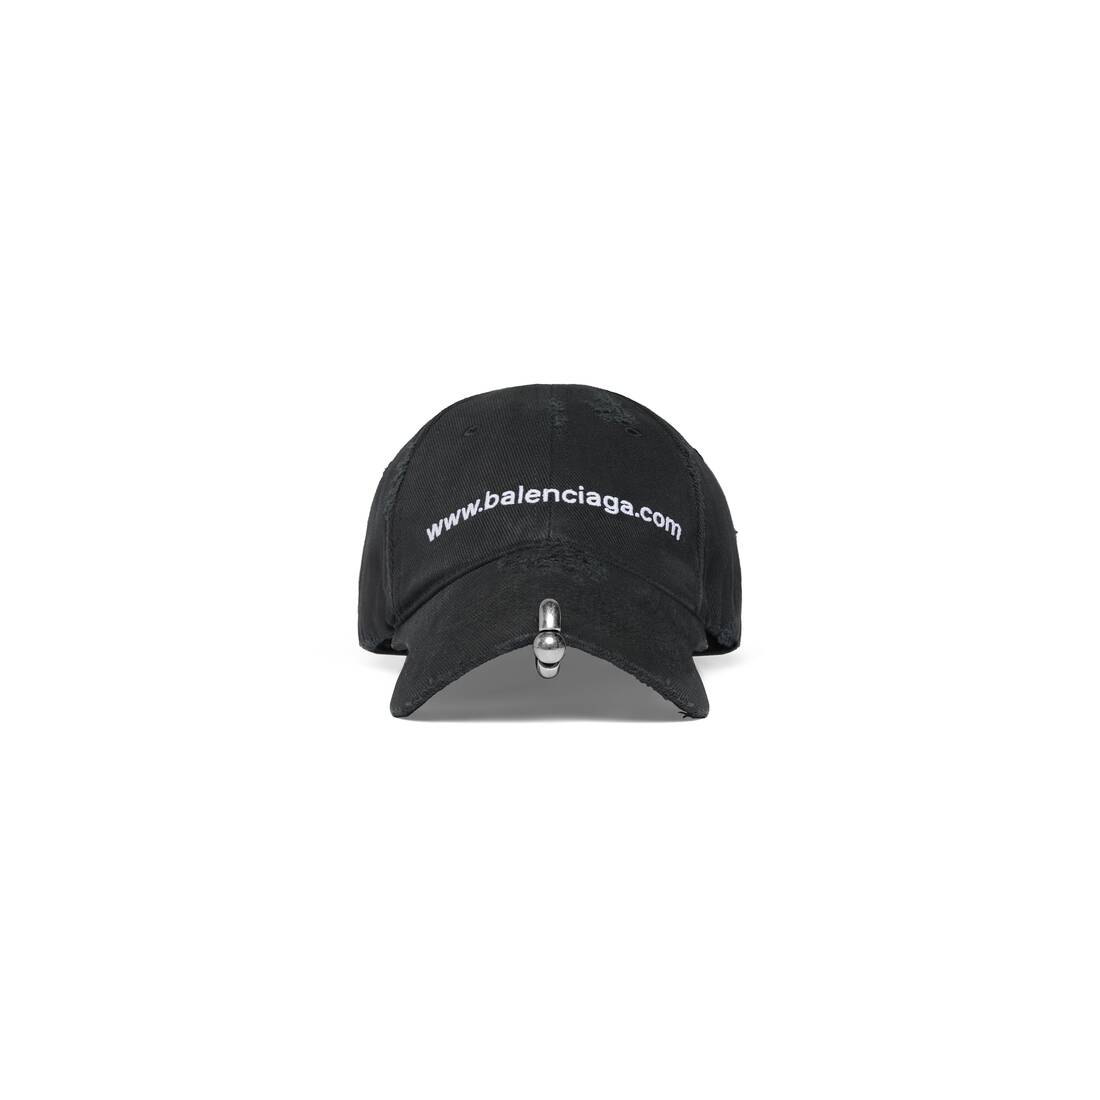 Mens luxury cap  Balenciaga white cap with black logo